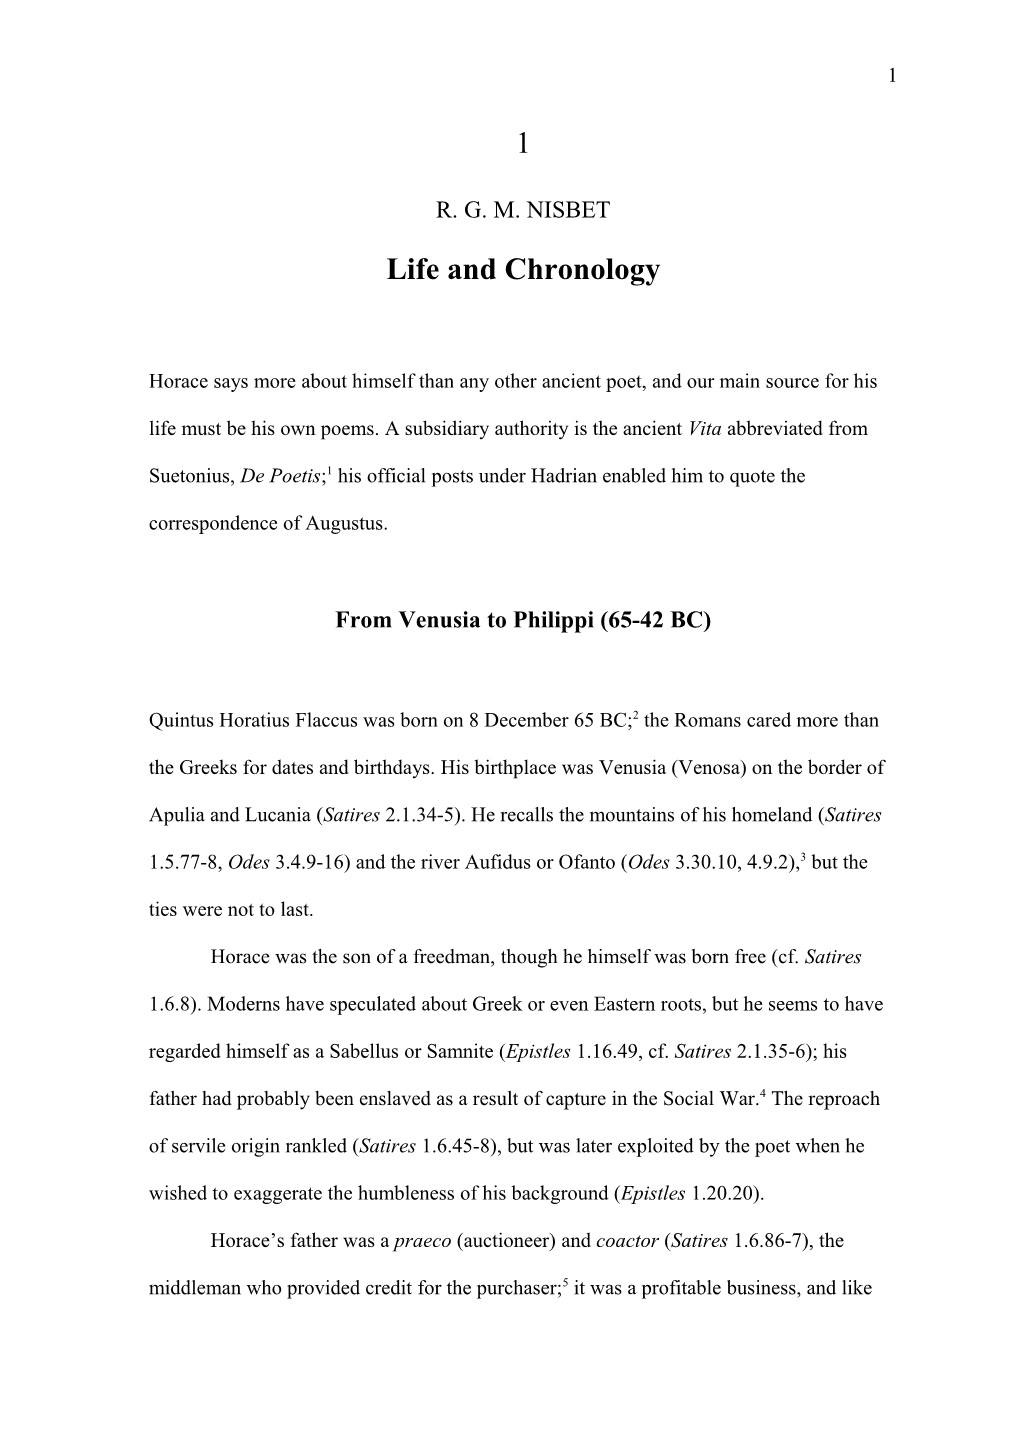 Life and Chronology